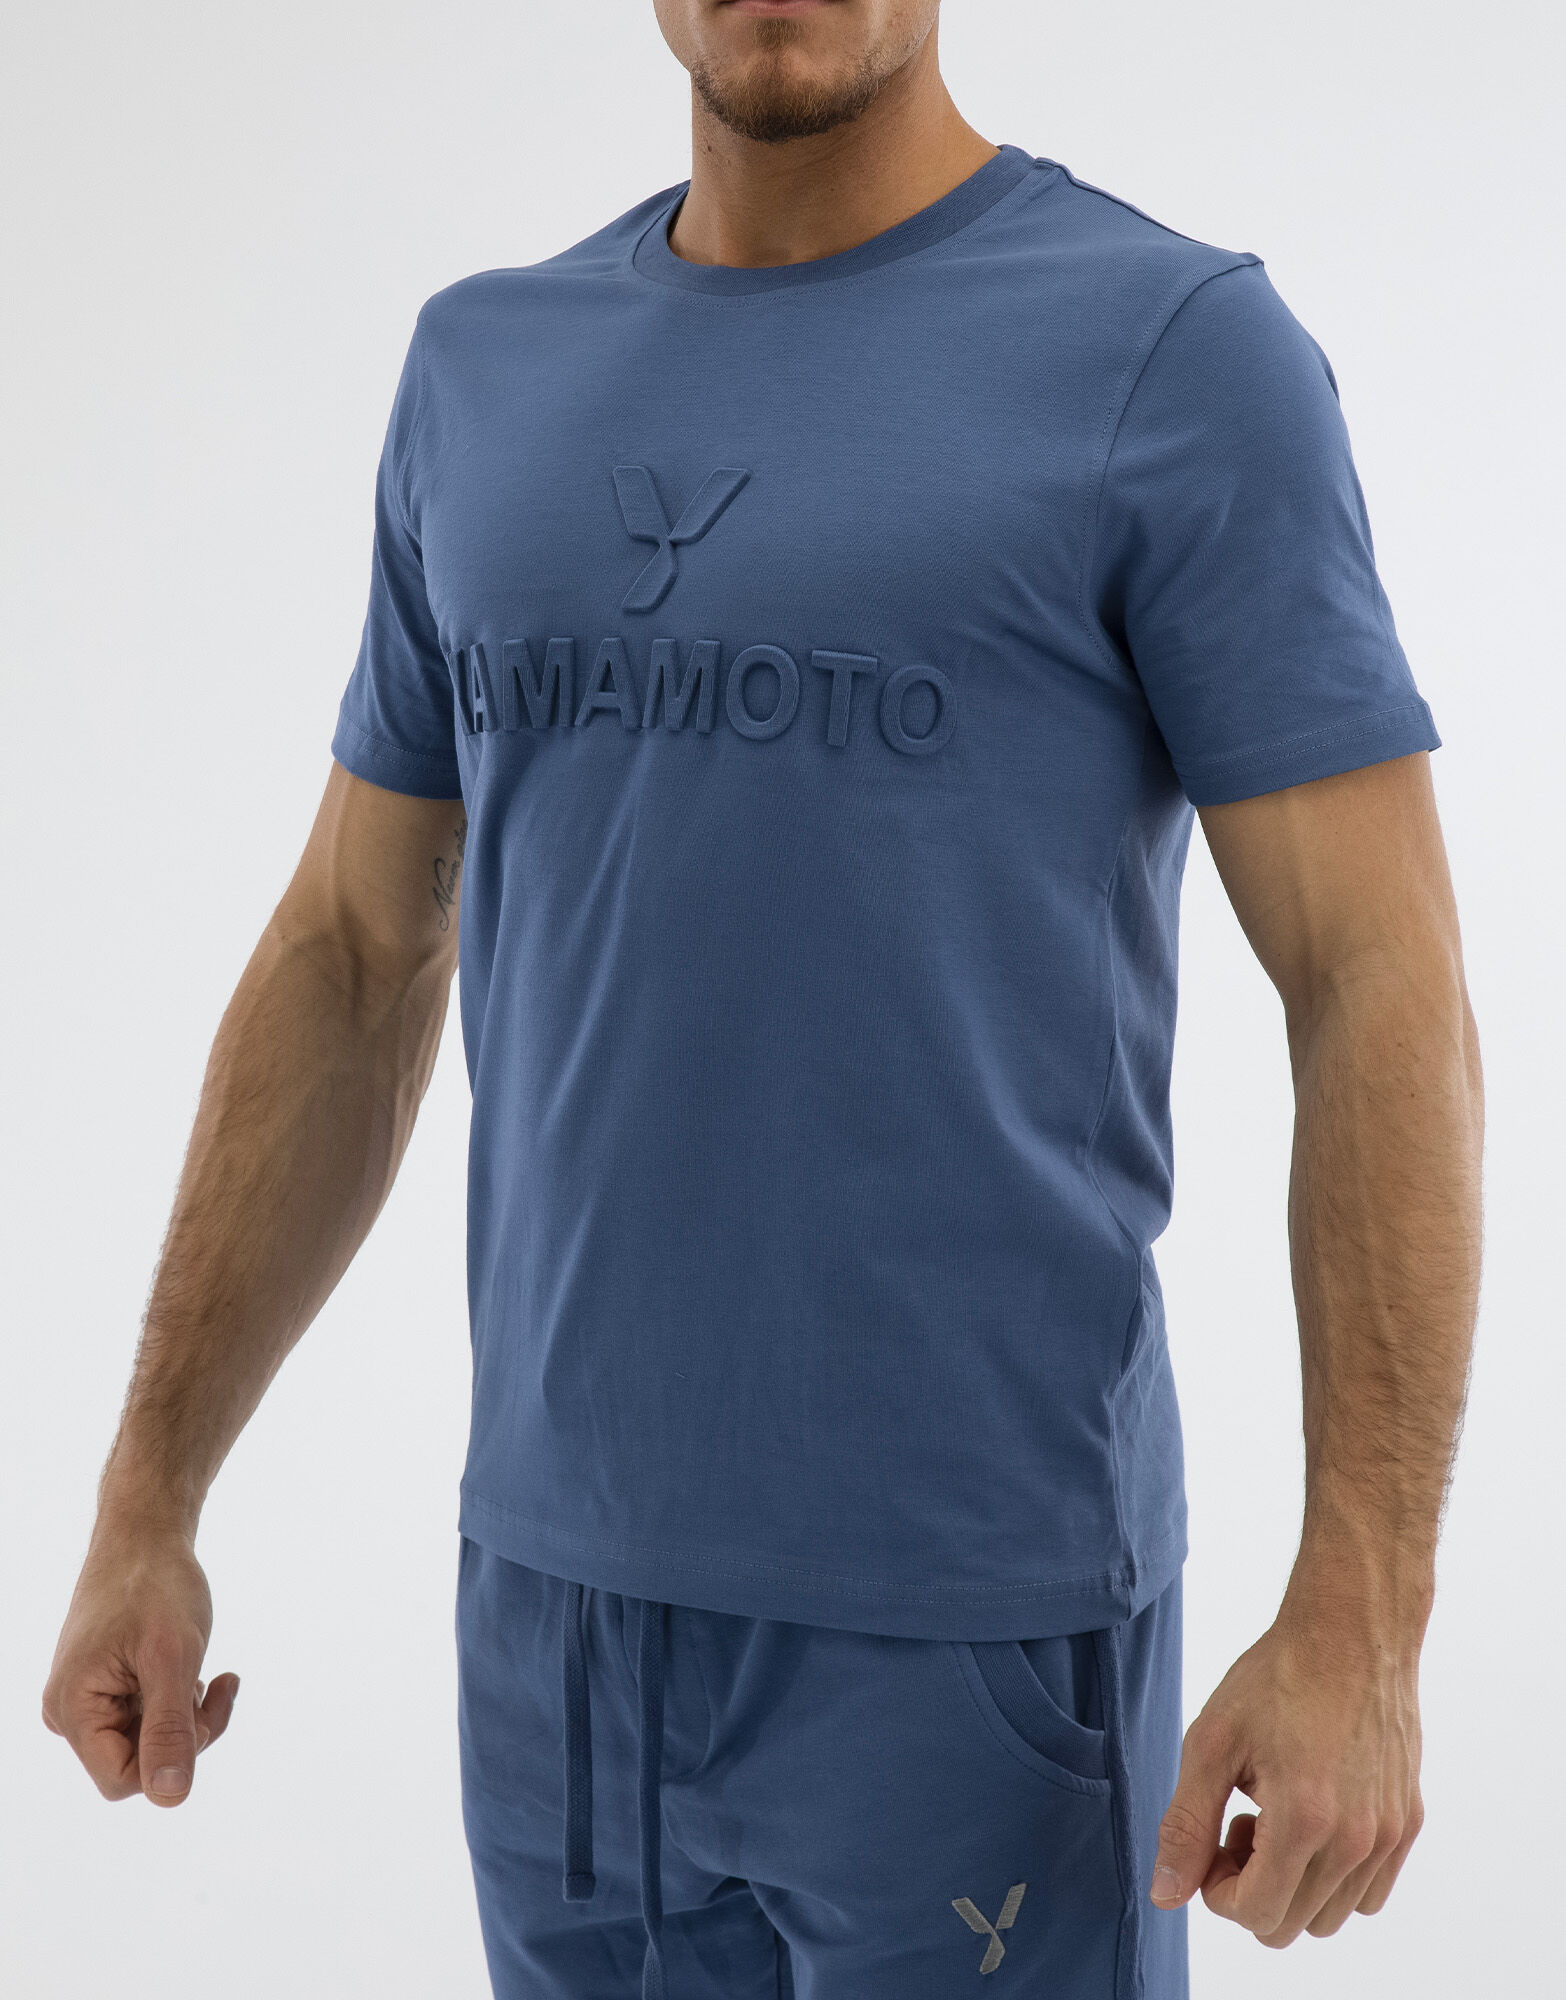 YAMAMOTO OUTFIT Man T-Shirt Embossed Colore: Blu Xxl